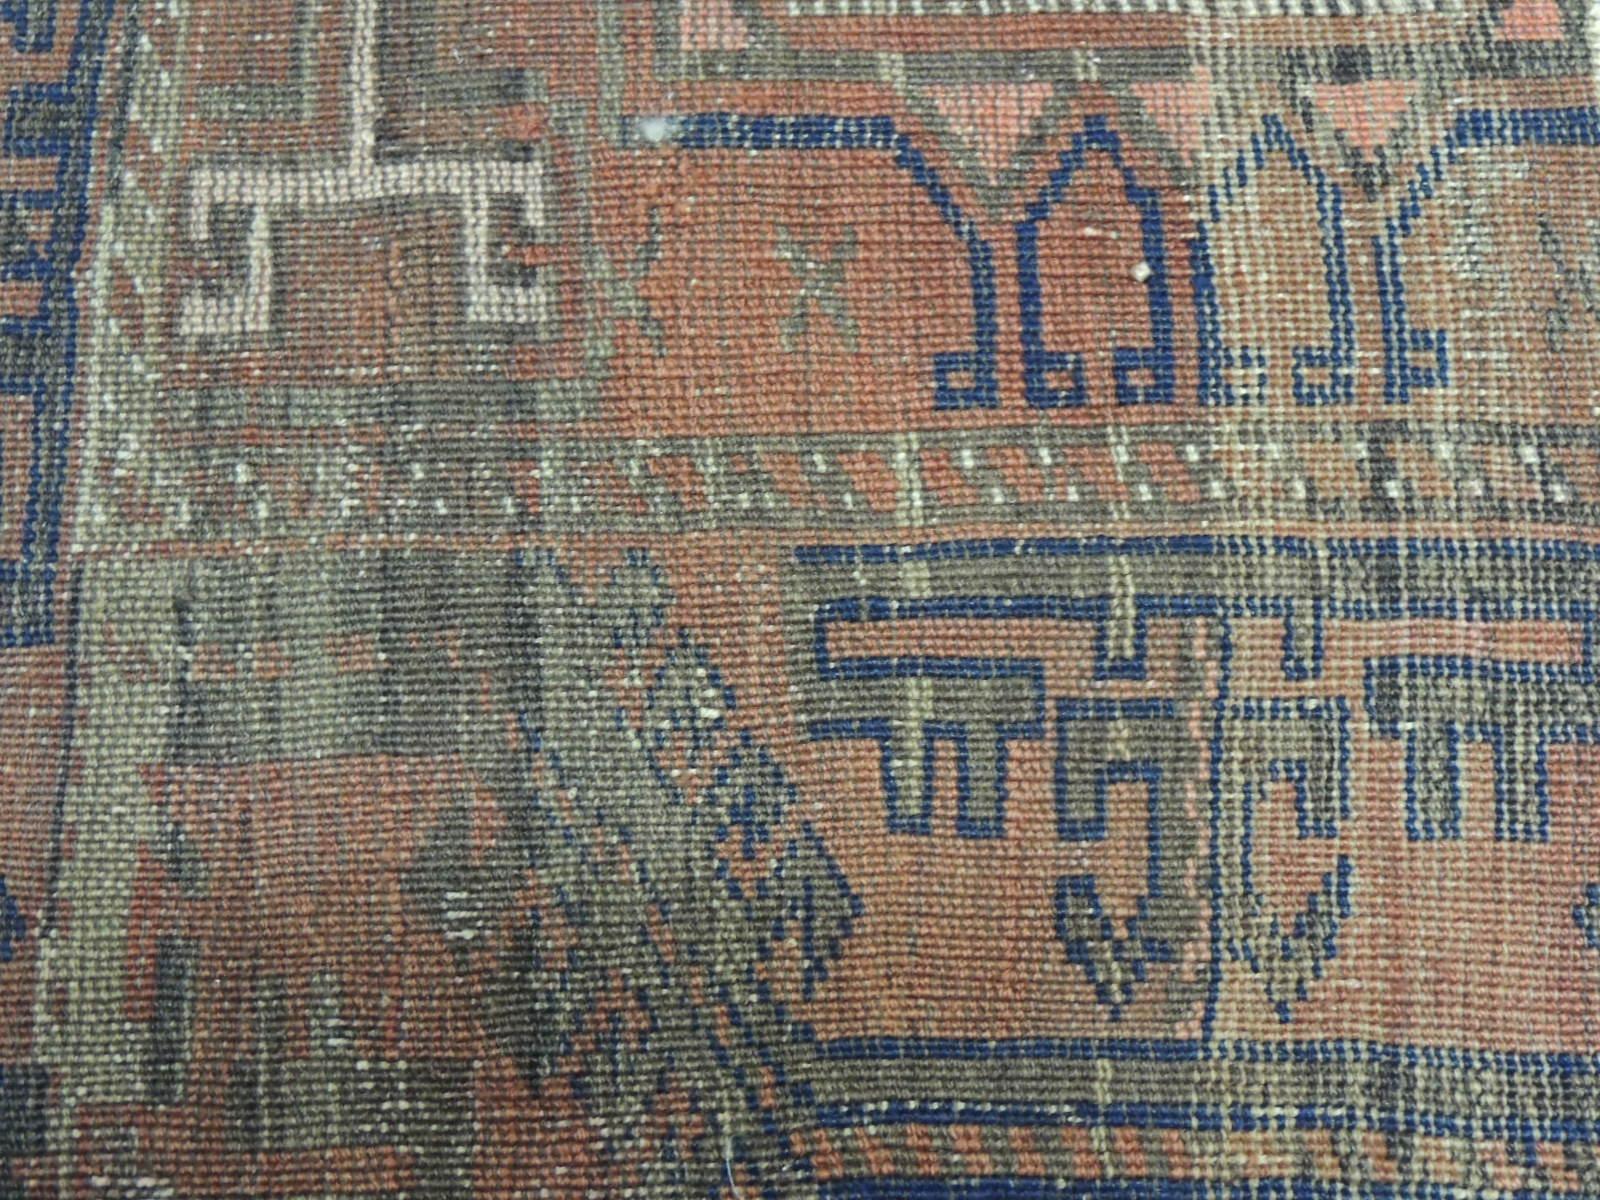 Armenian Antique Orange and Blue Persian Rug Fragment